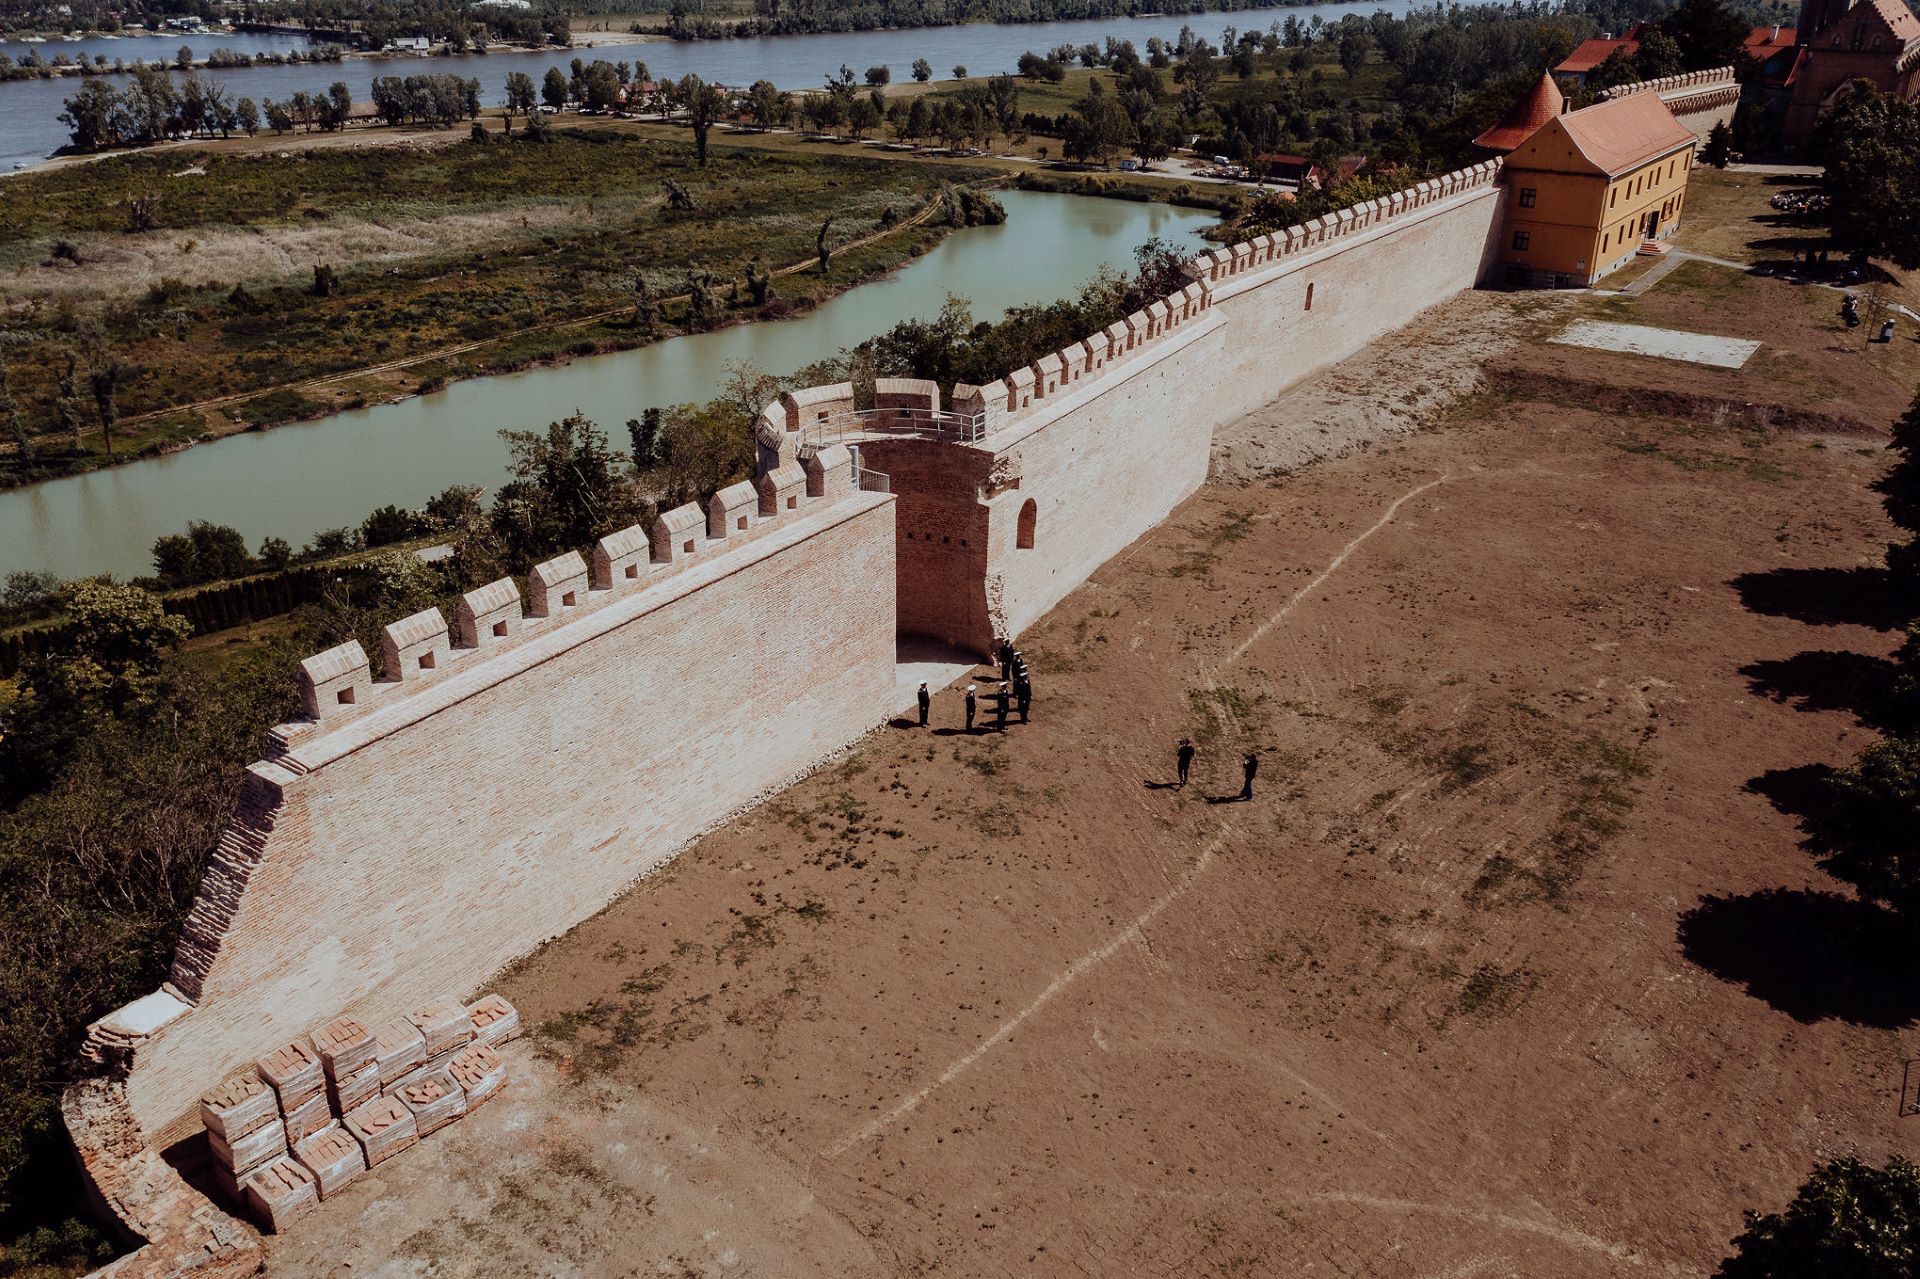 Ilok's Historic Walls Opened